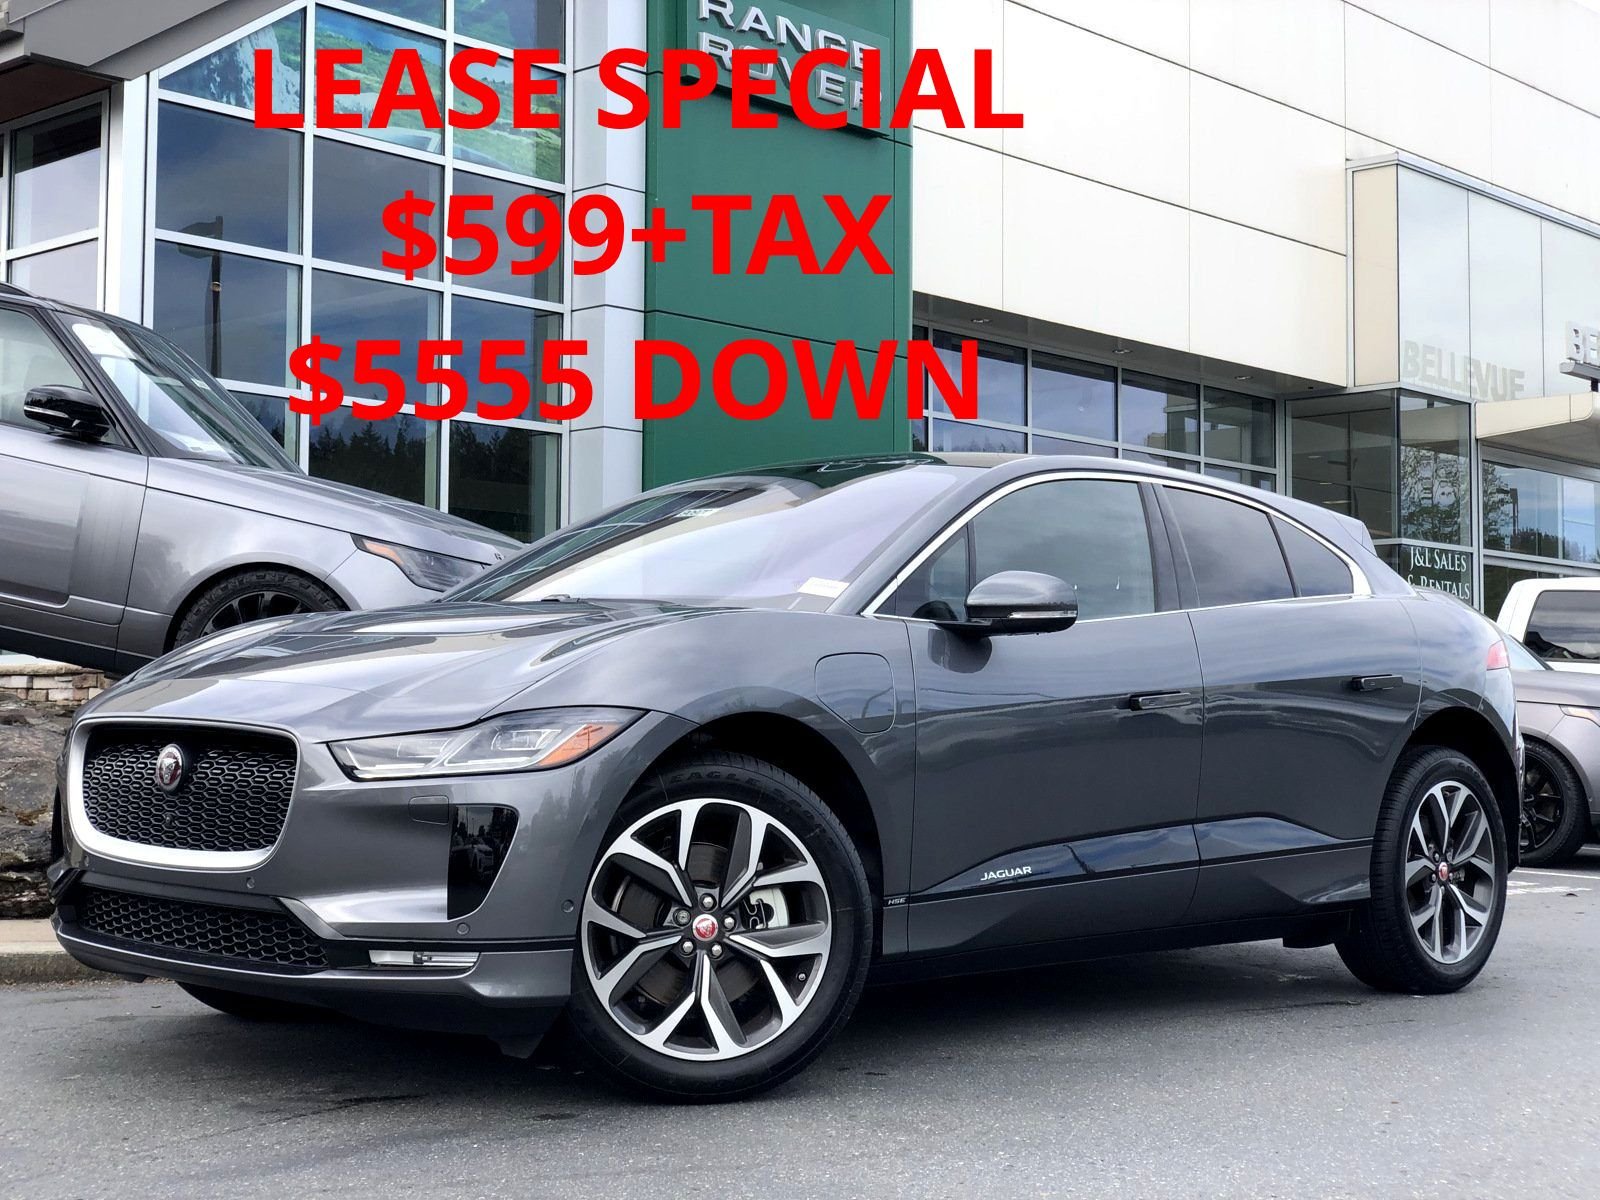 New 2019 Jaguar I-PACE HSE Sport Utility in Lynnwood ...